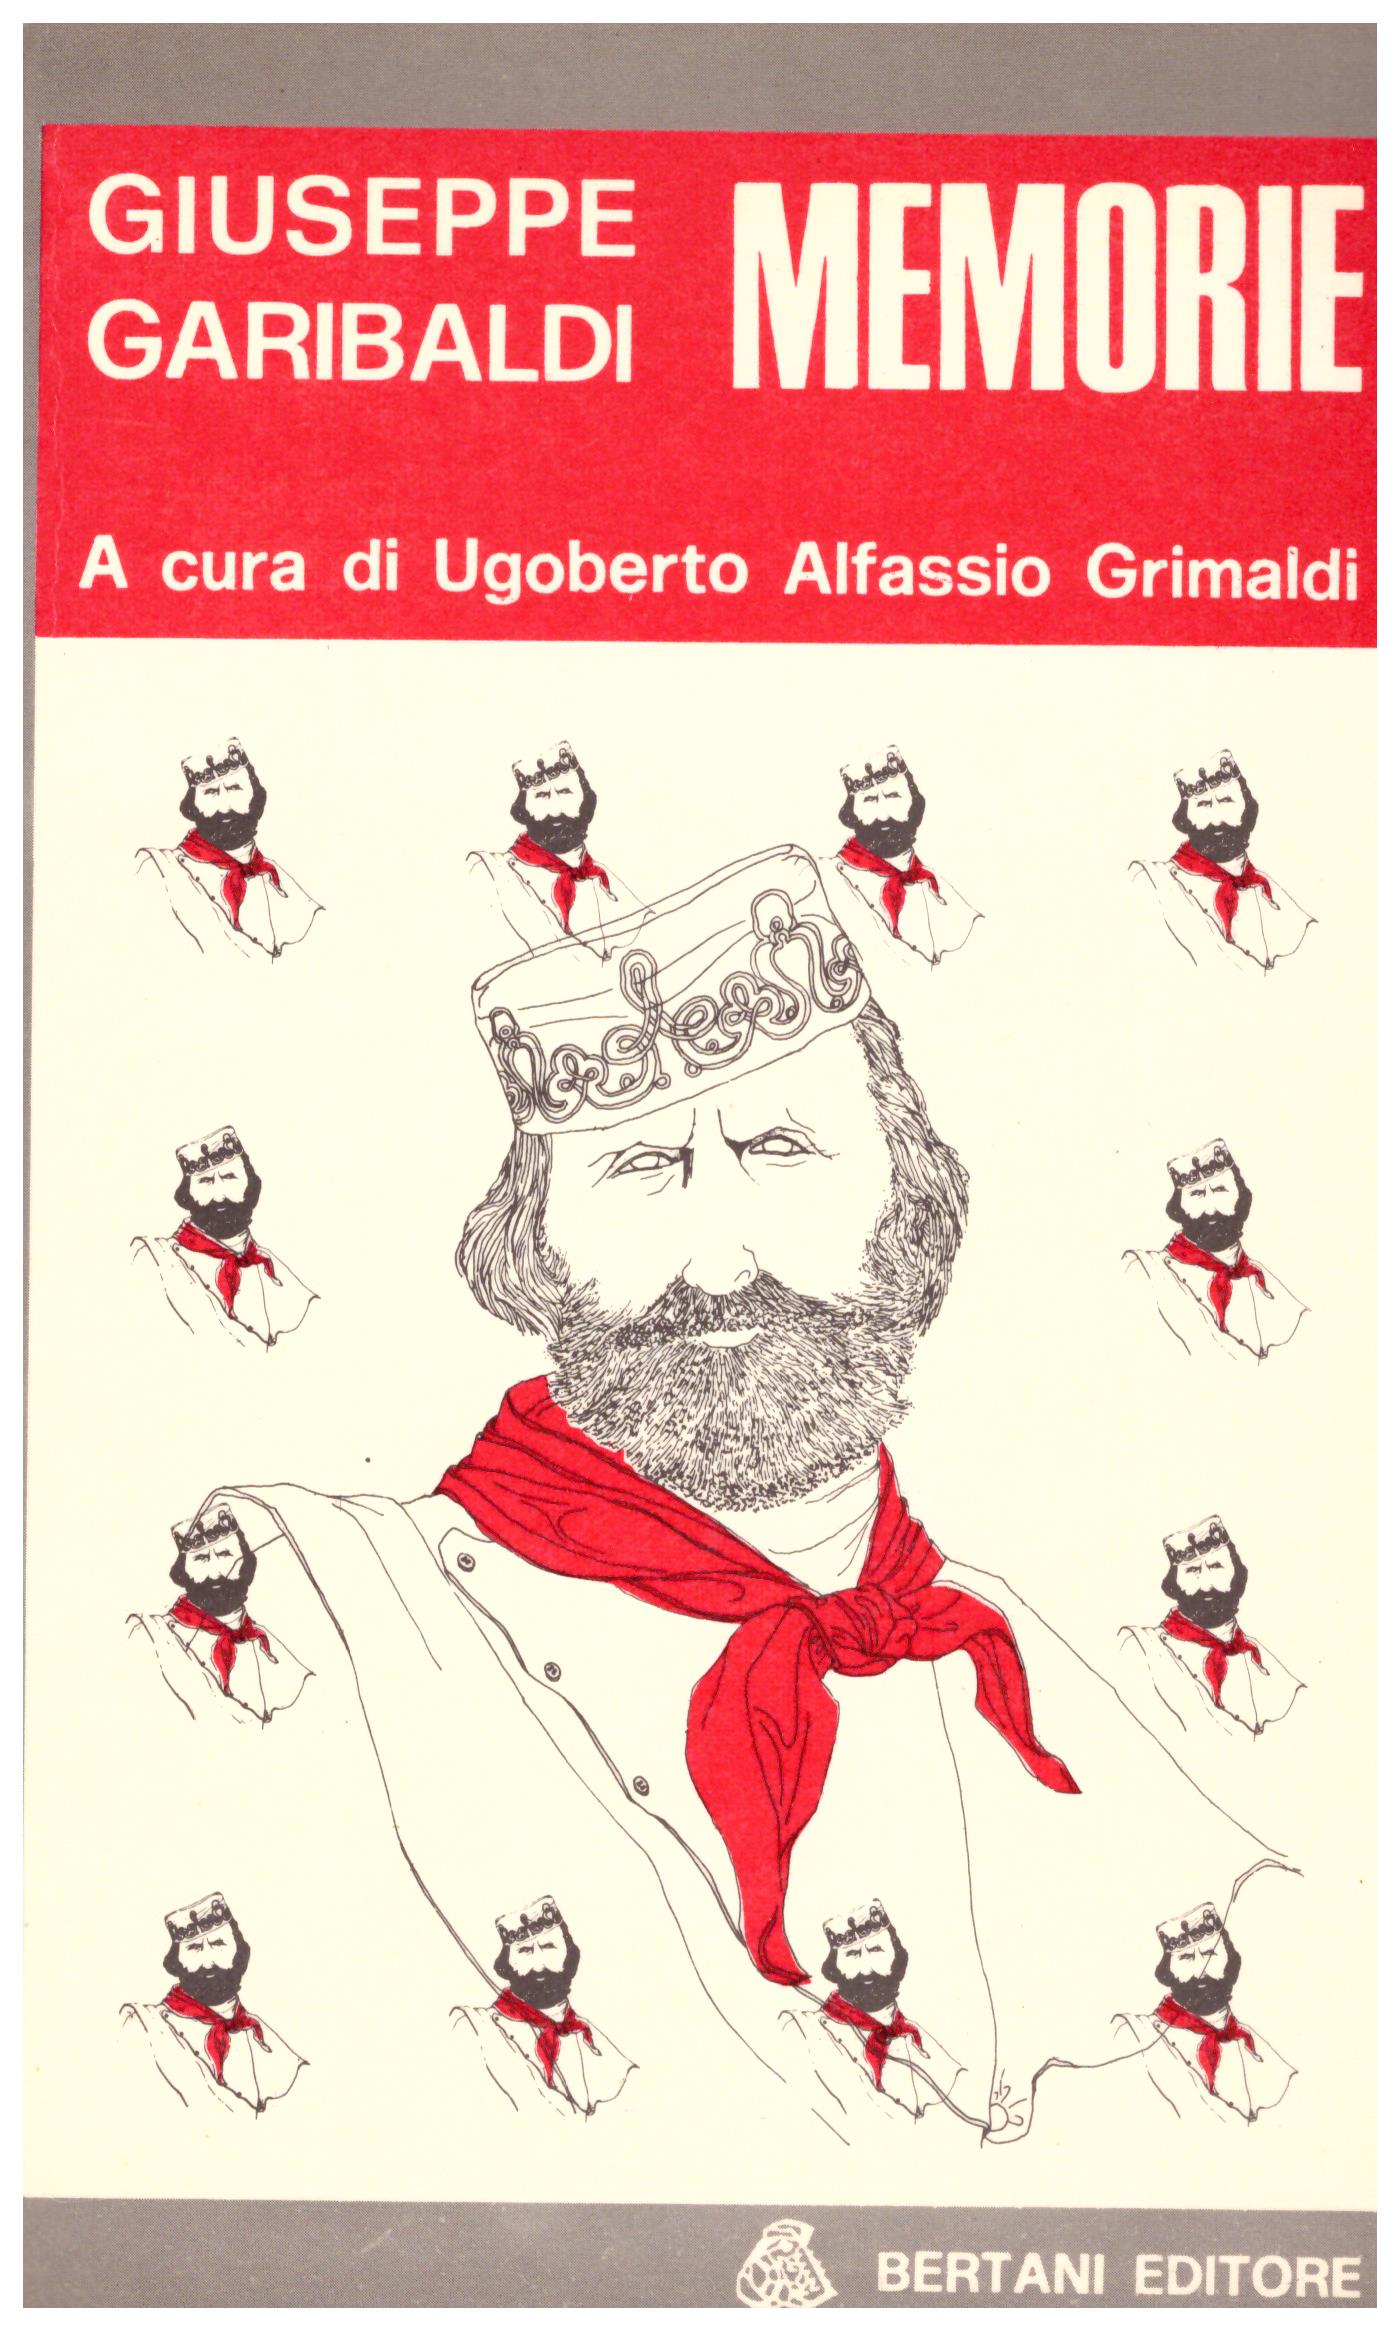 Giuseppe Garibaldi, Memorie.